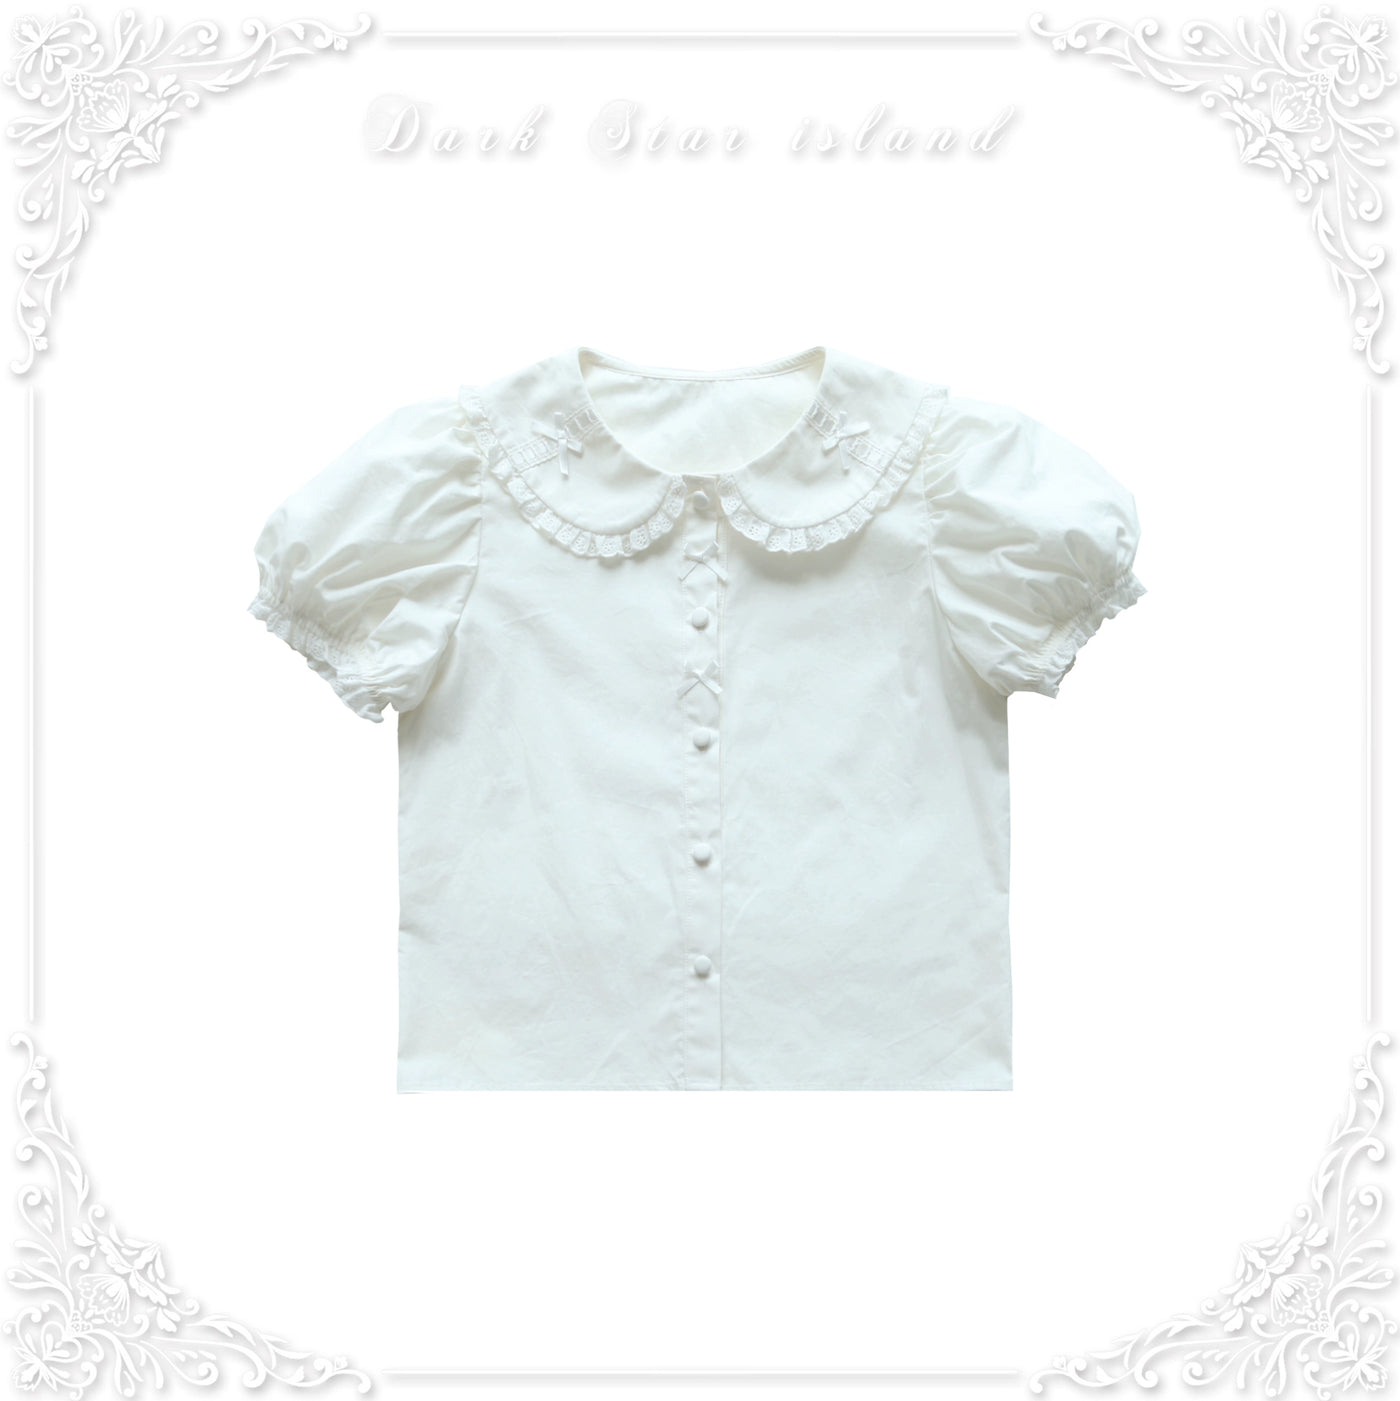 Dark Star Island~Kawaii Lolita Dress OP Blouse SK Set Free size Off-white pure cotton bubble sleeve shirt 